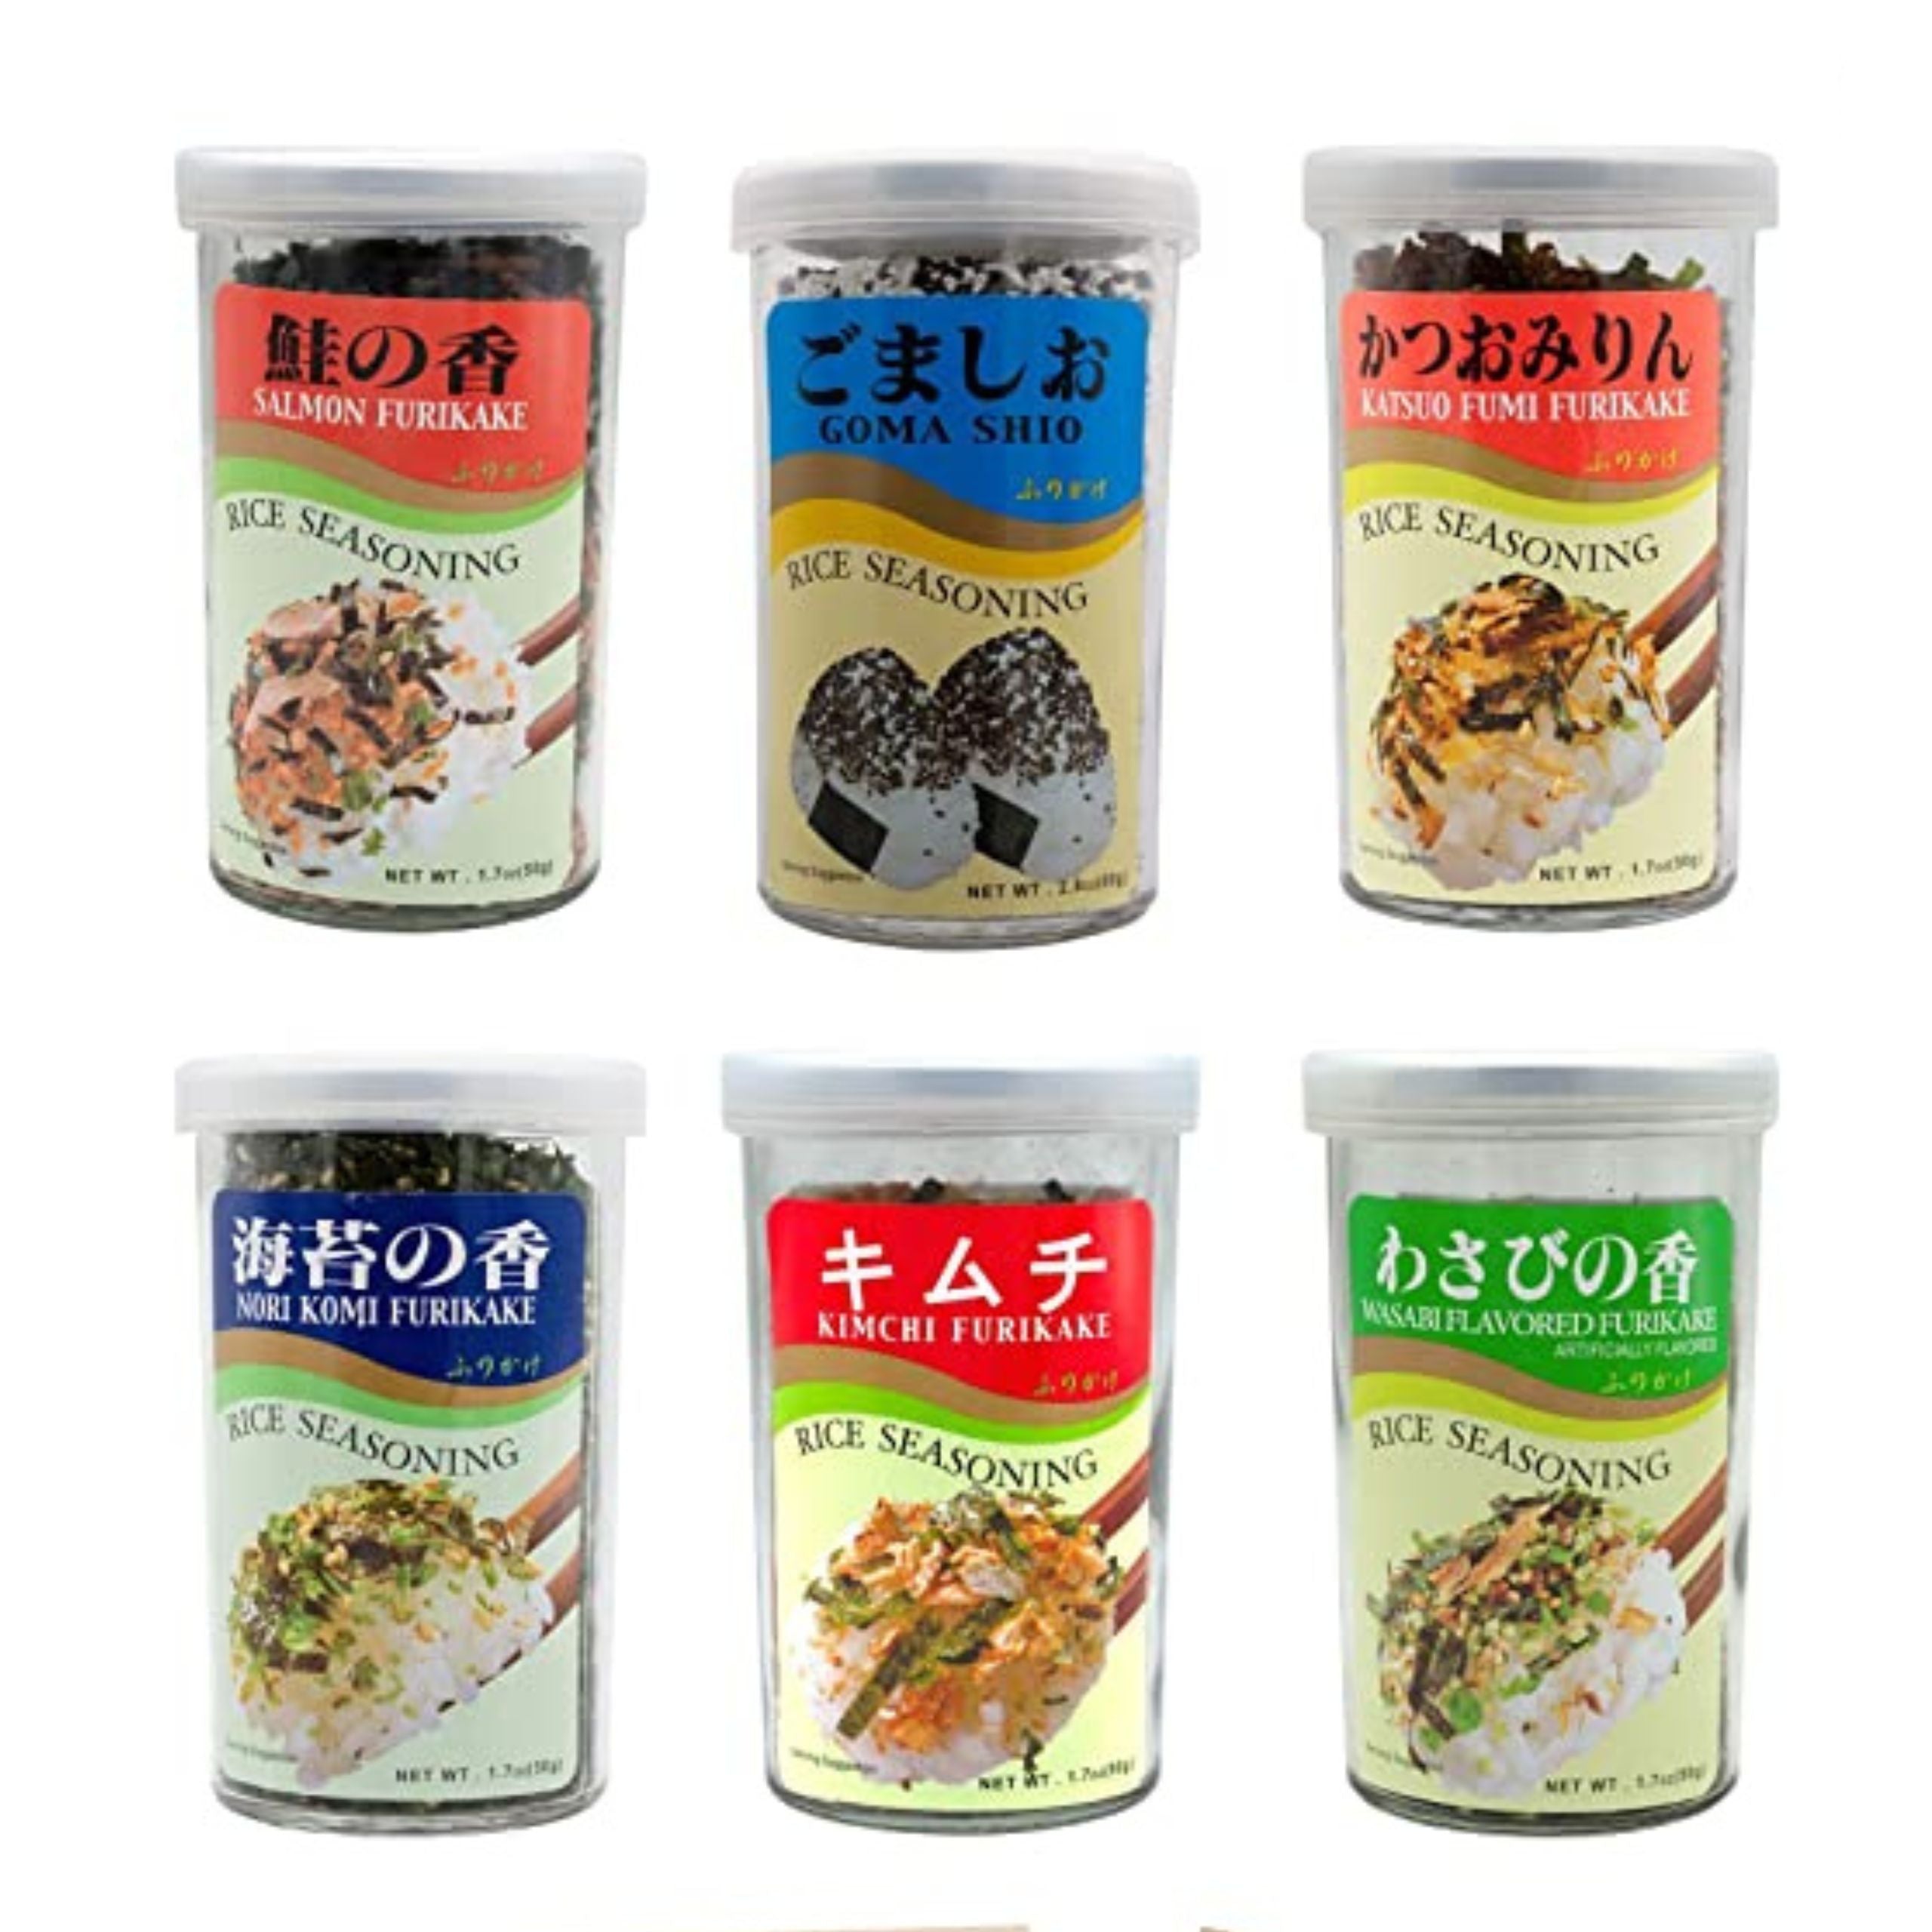 Ajishima Furikake Rice Seasoning: Katsuo Fumi Bonito